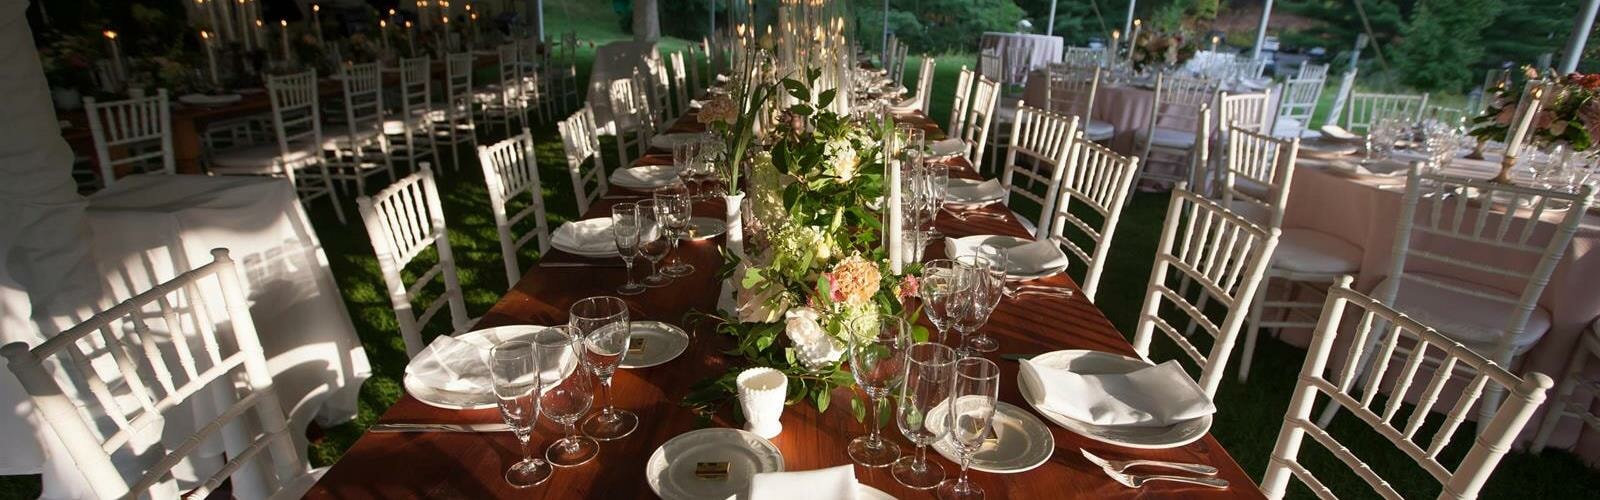 Wedding_Table